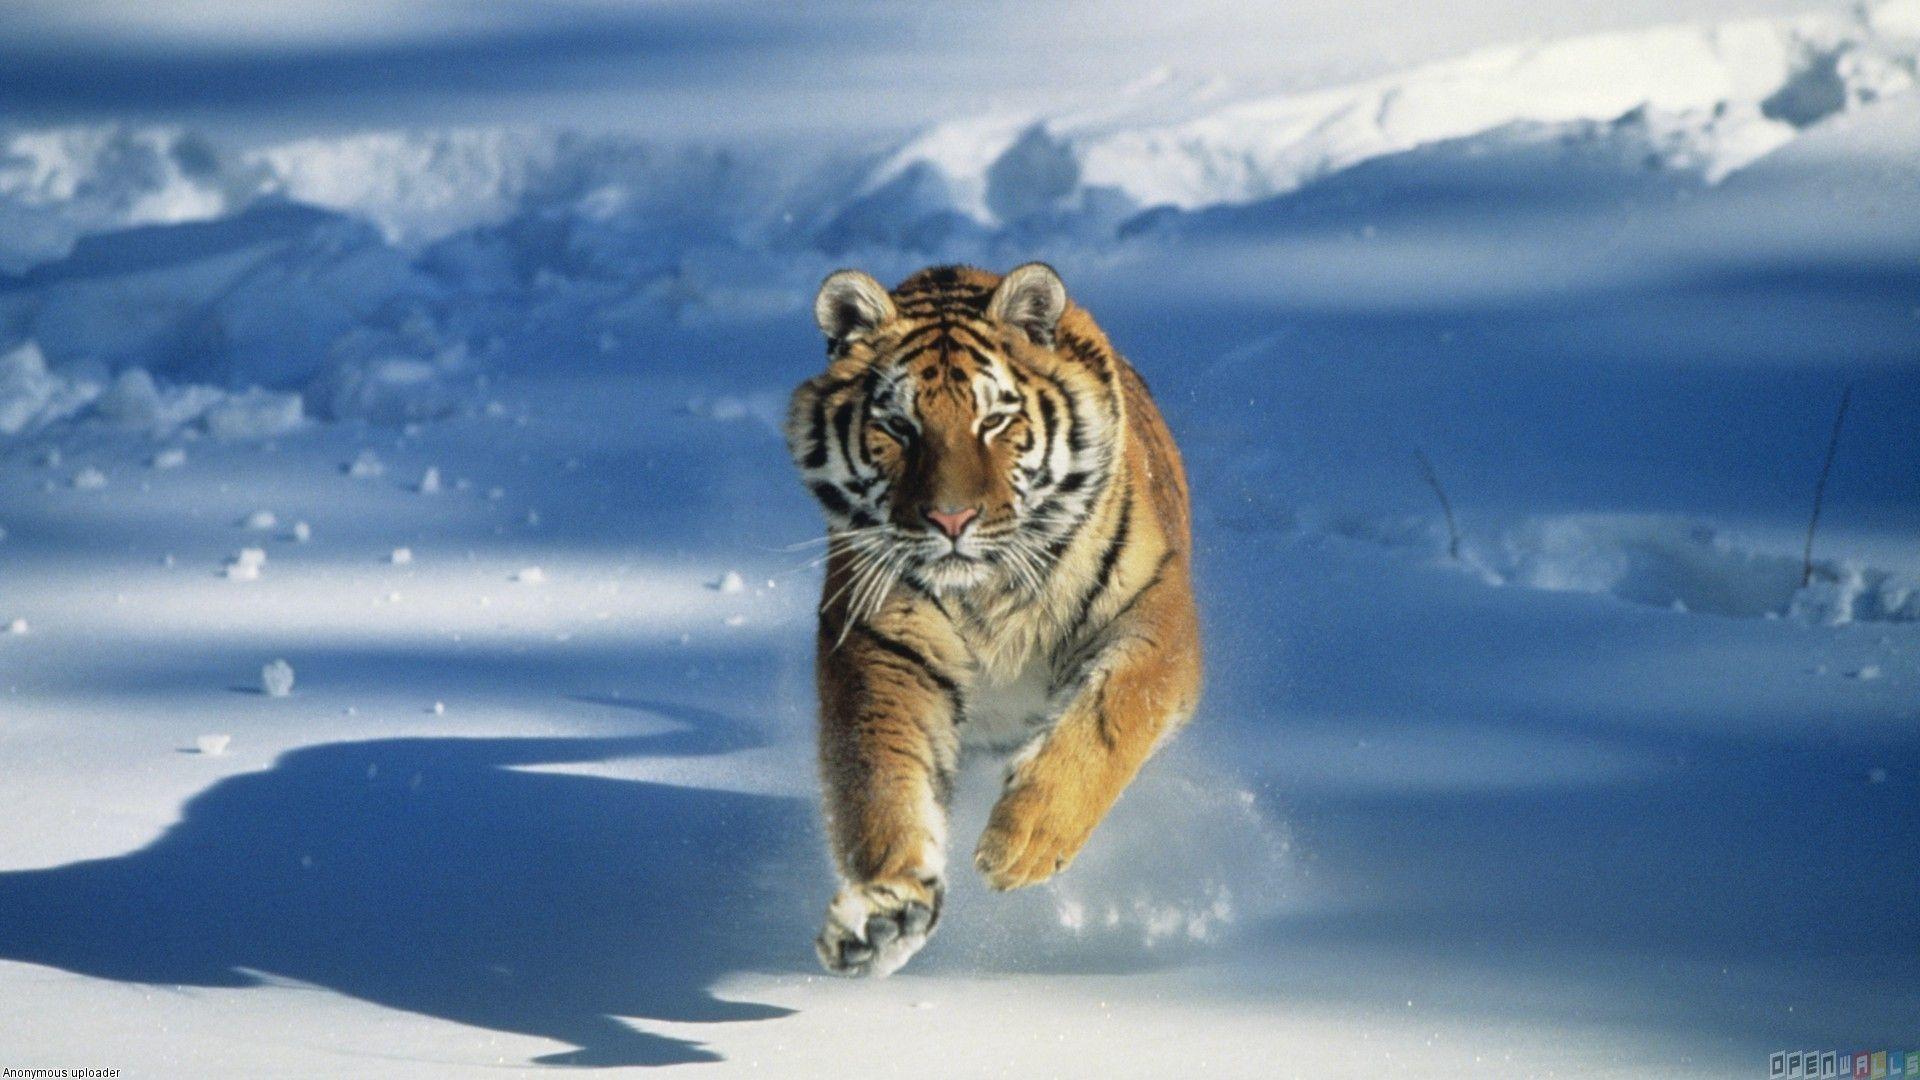 Snow Tiger Wallpaper, PC Snow Tiger Wallpaper Most Beautiful